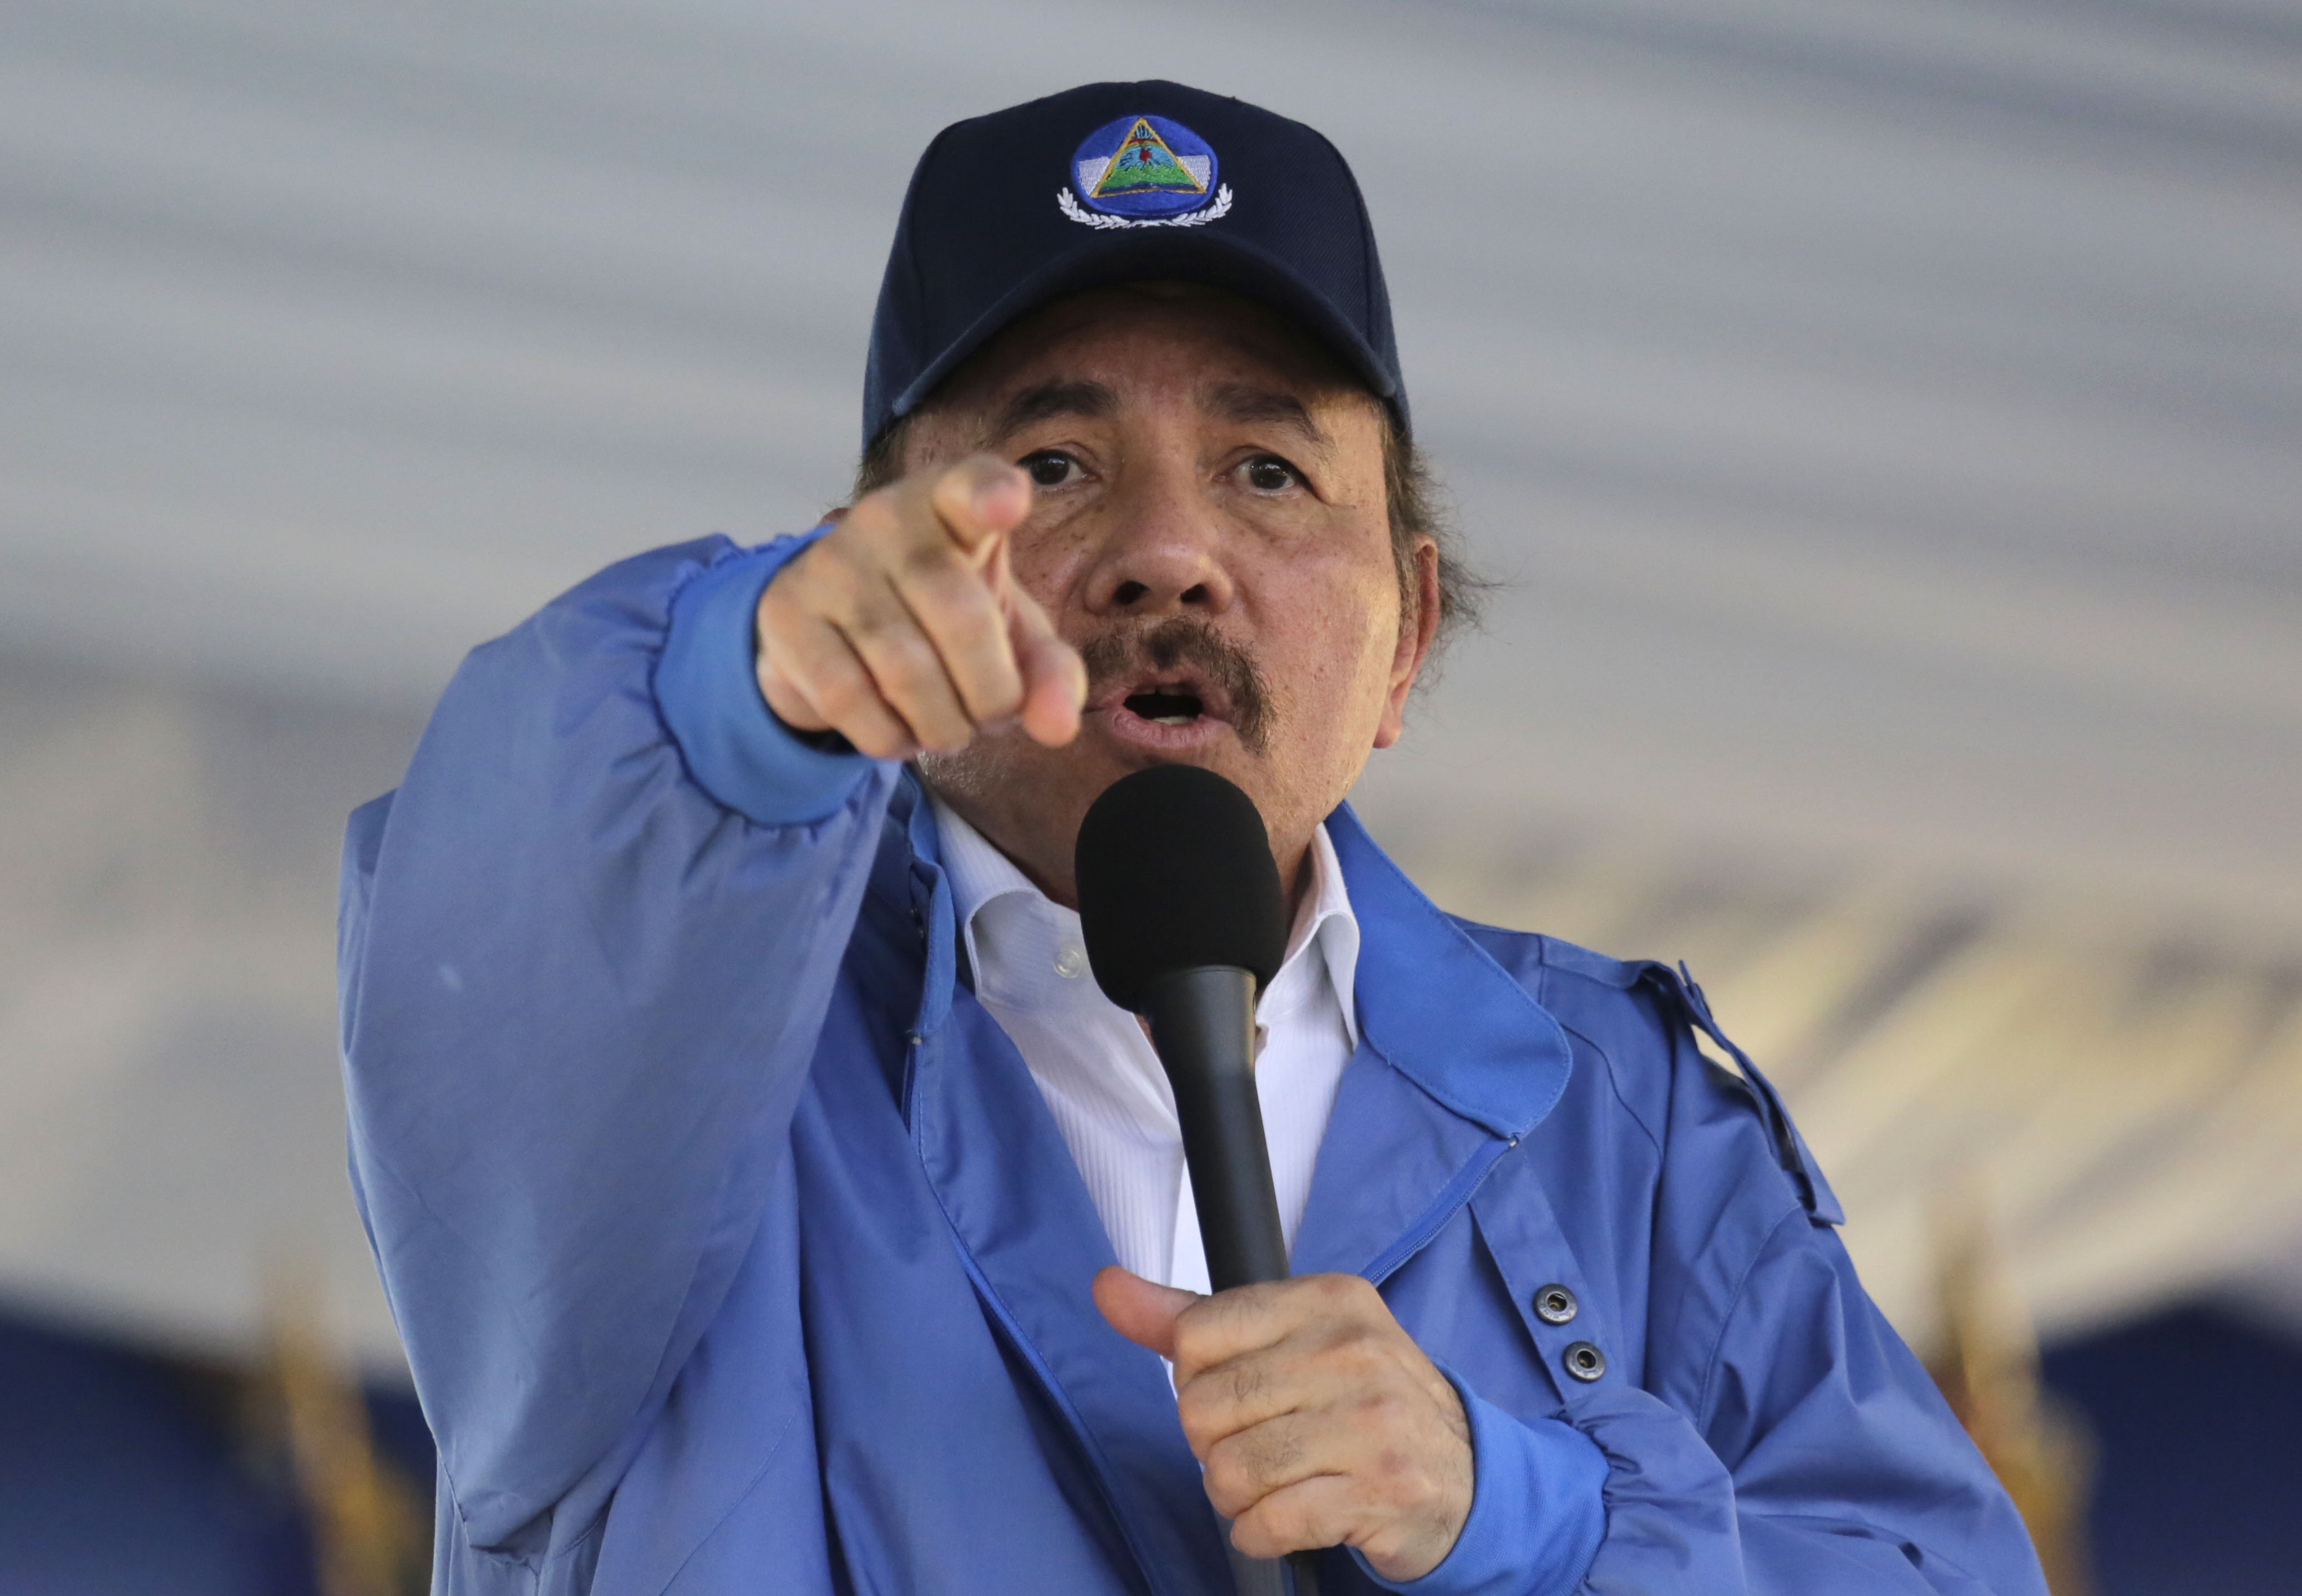 Daniel Ortega Nicaragua Dictator